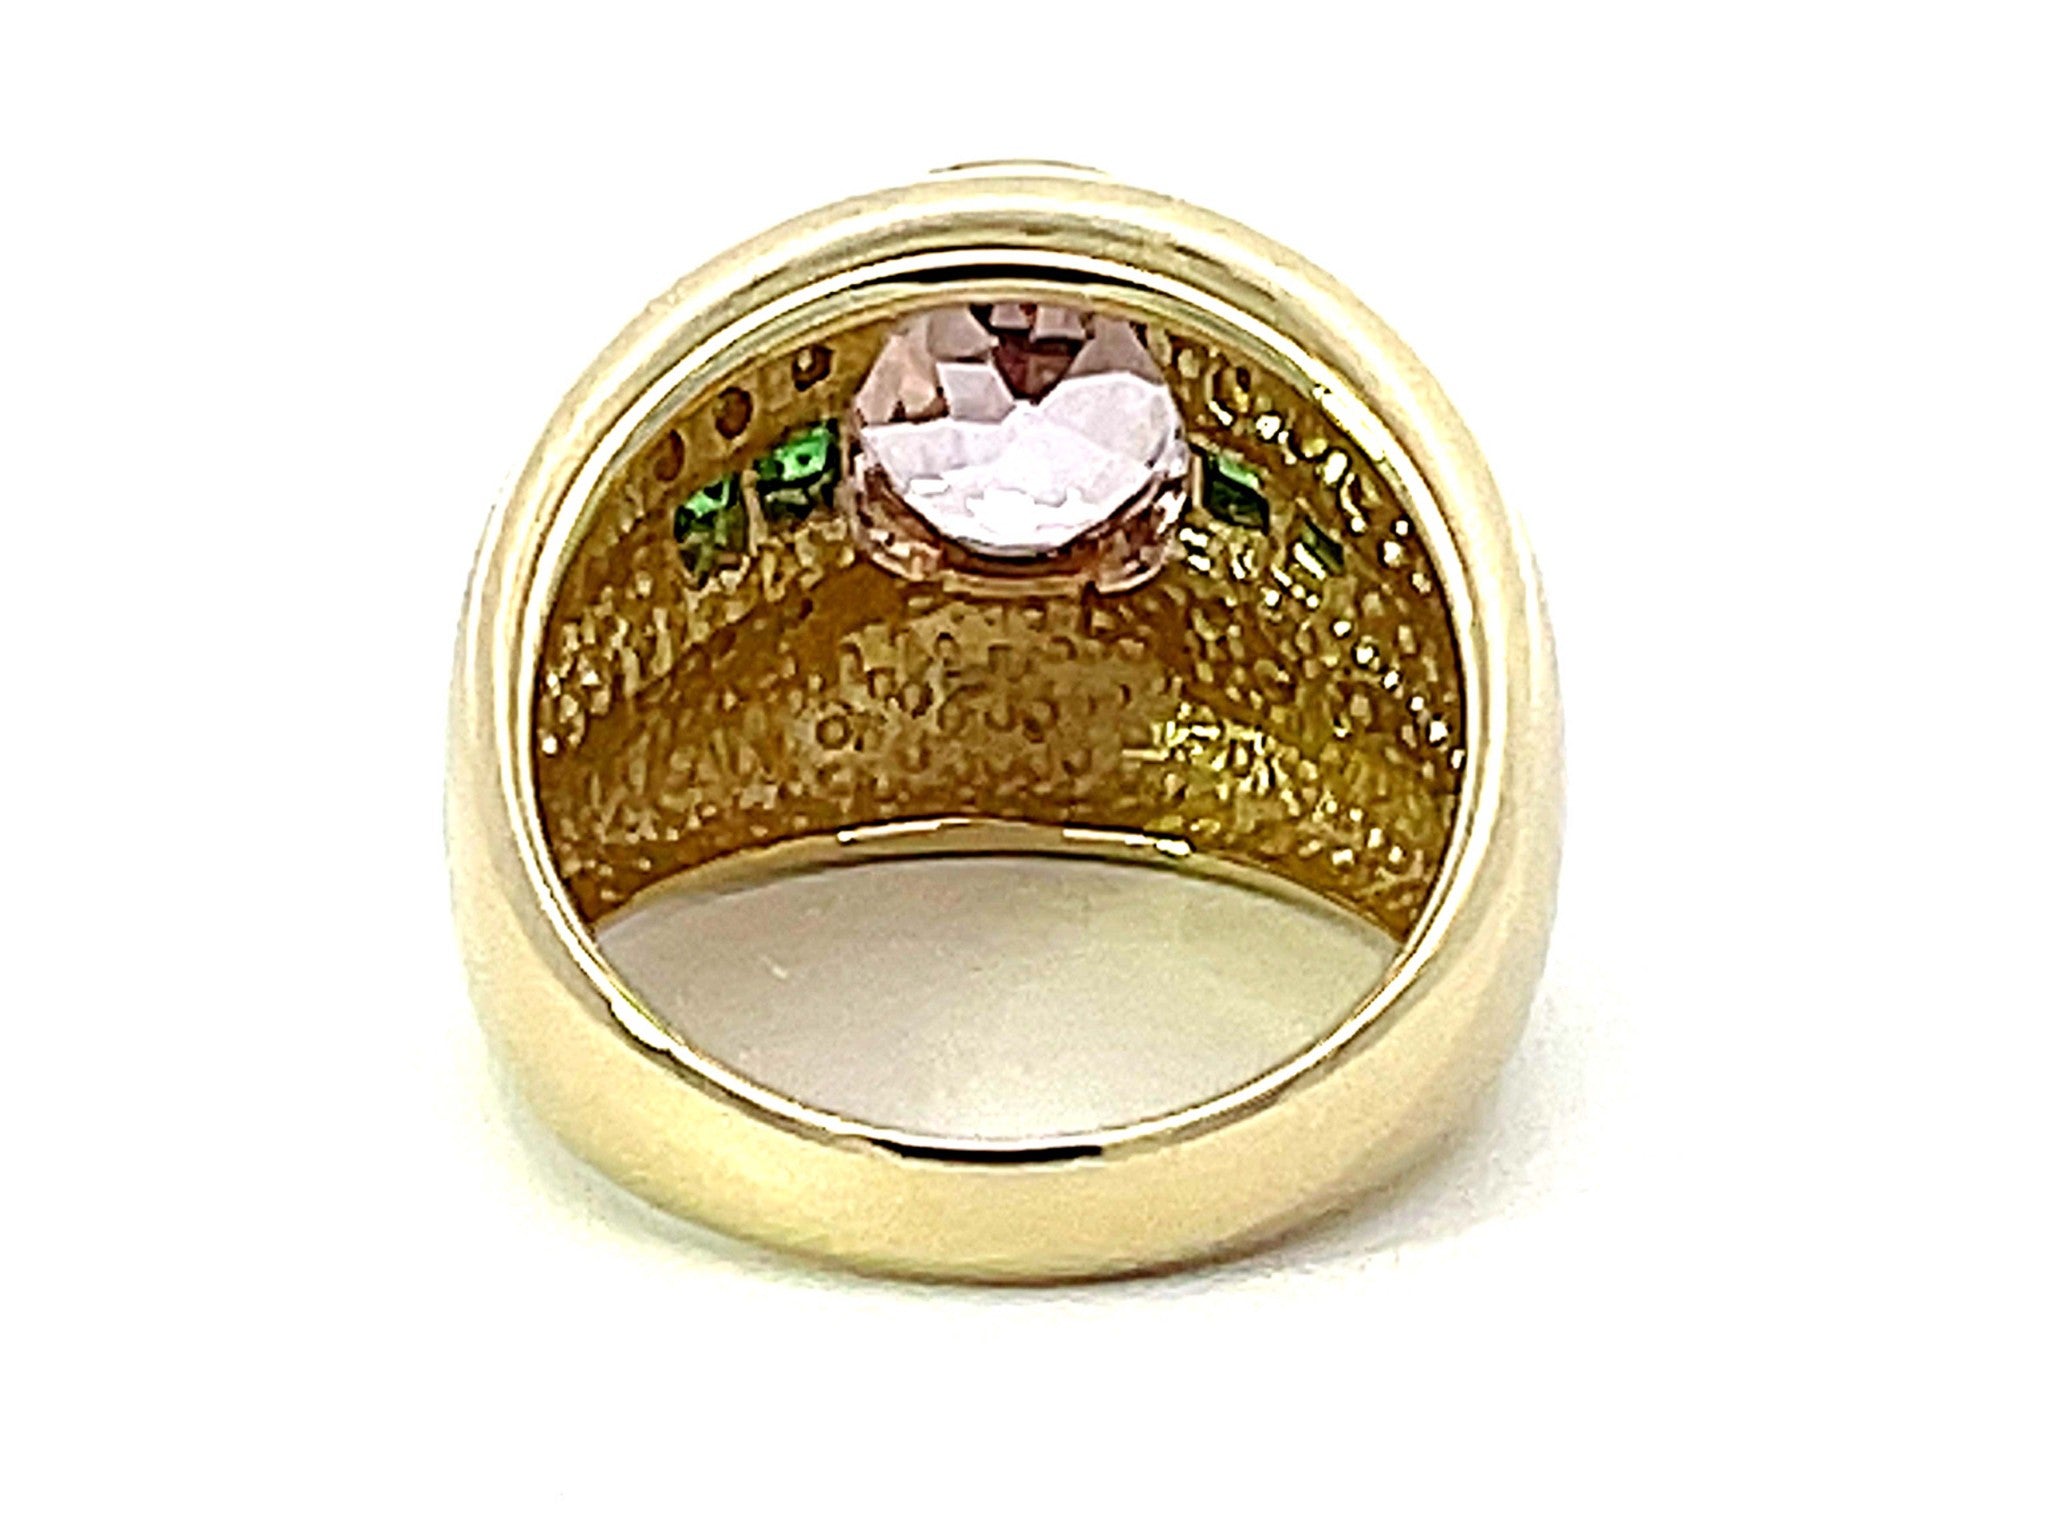 Pink Kunzite Green Tsavorite Garnet Diamond Cigar Band Ring in 14k Yellow Gold